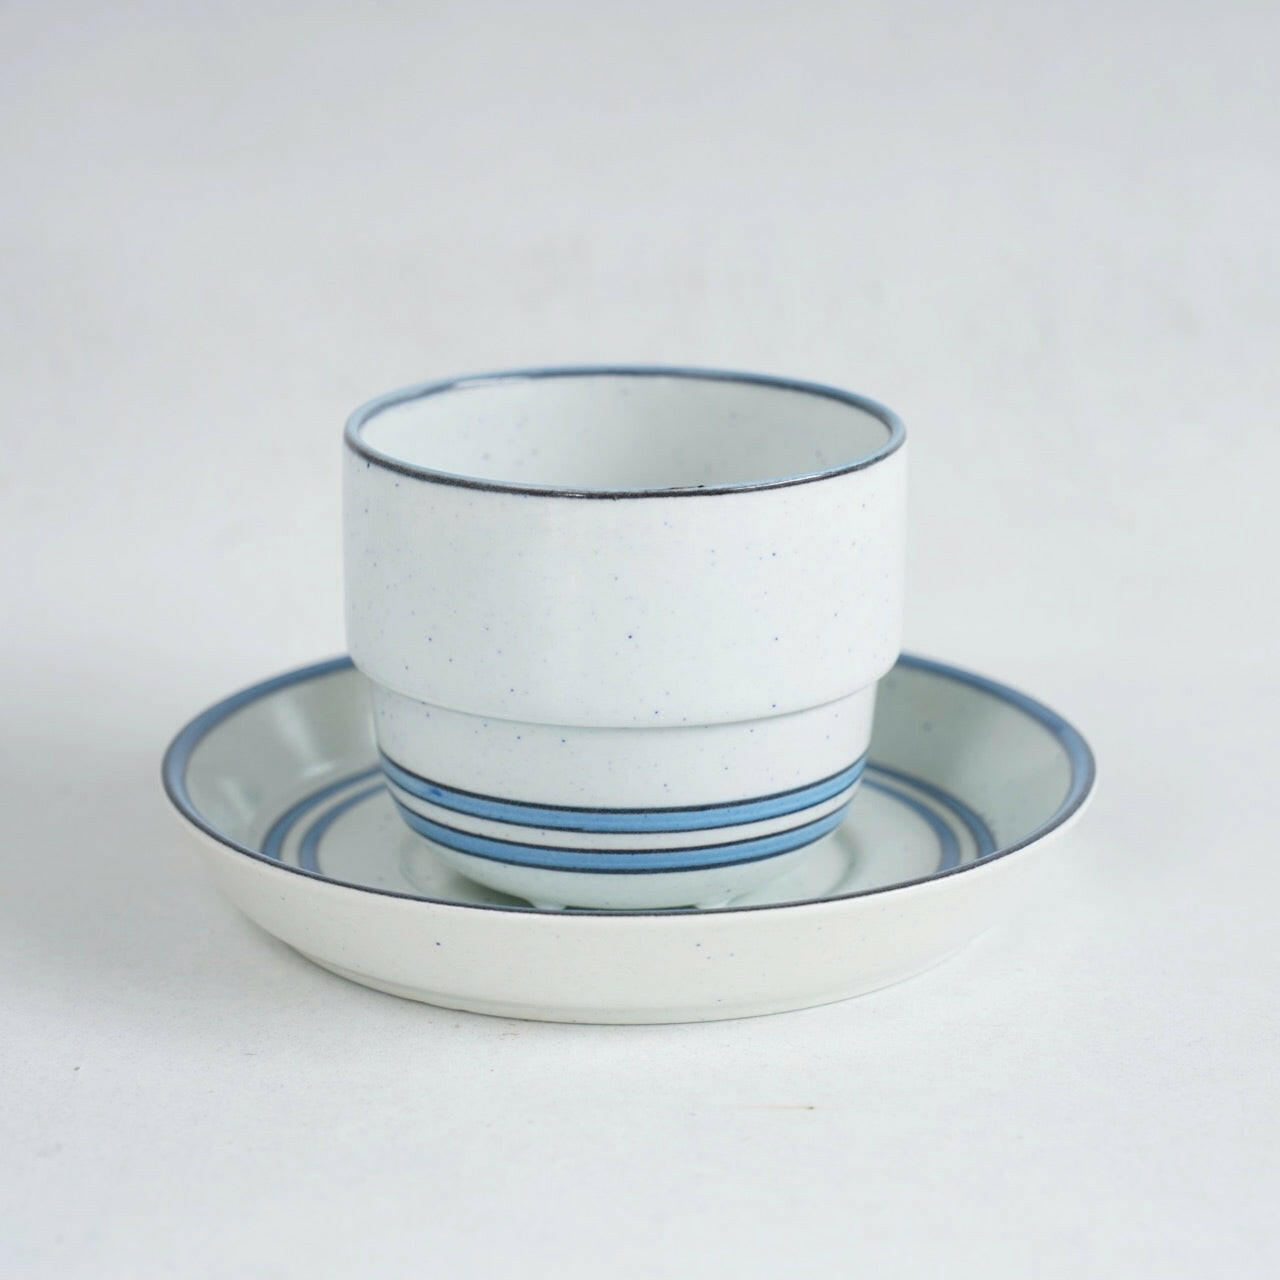 Gustavsberg Dart teacup and saucer